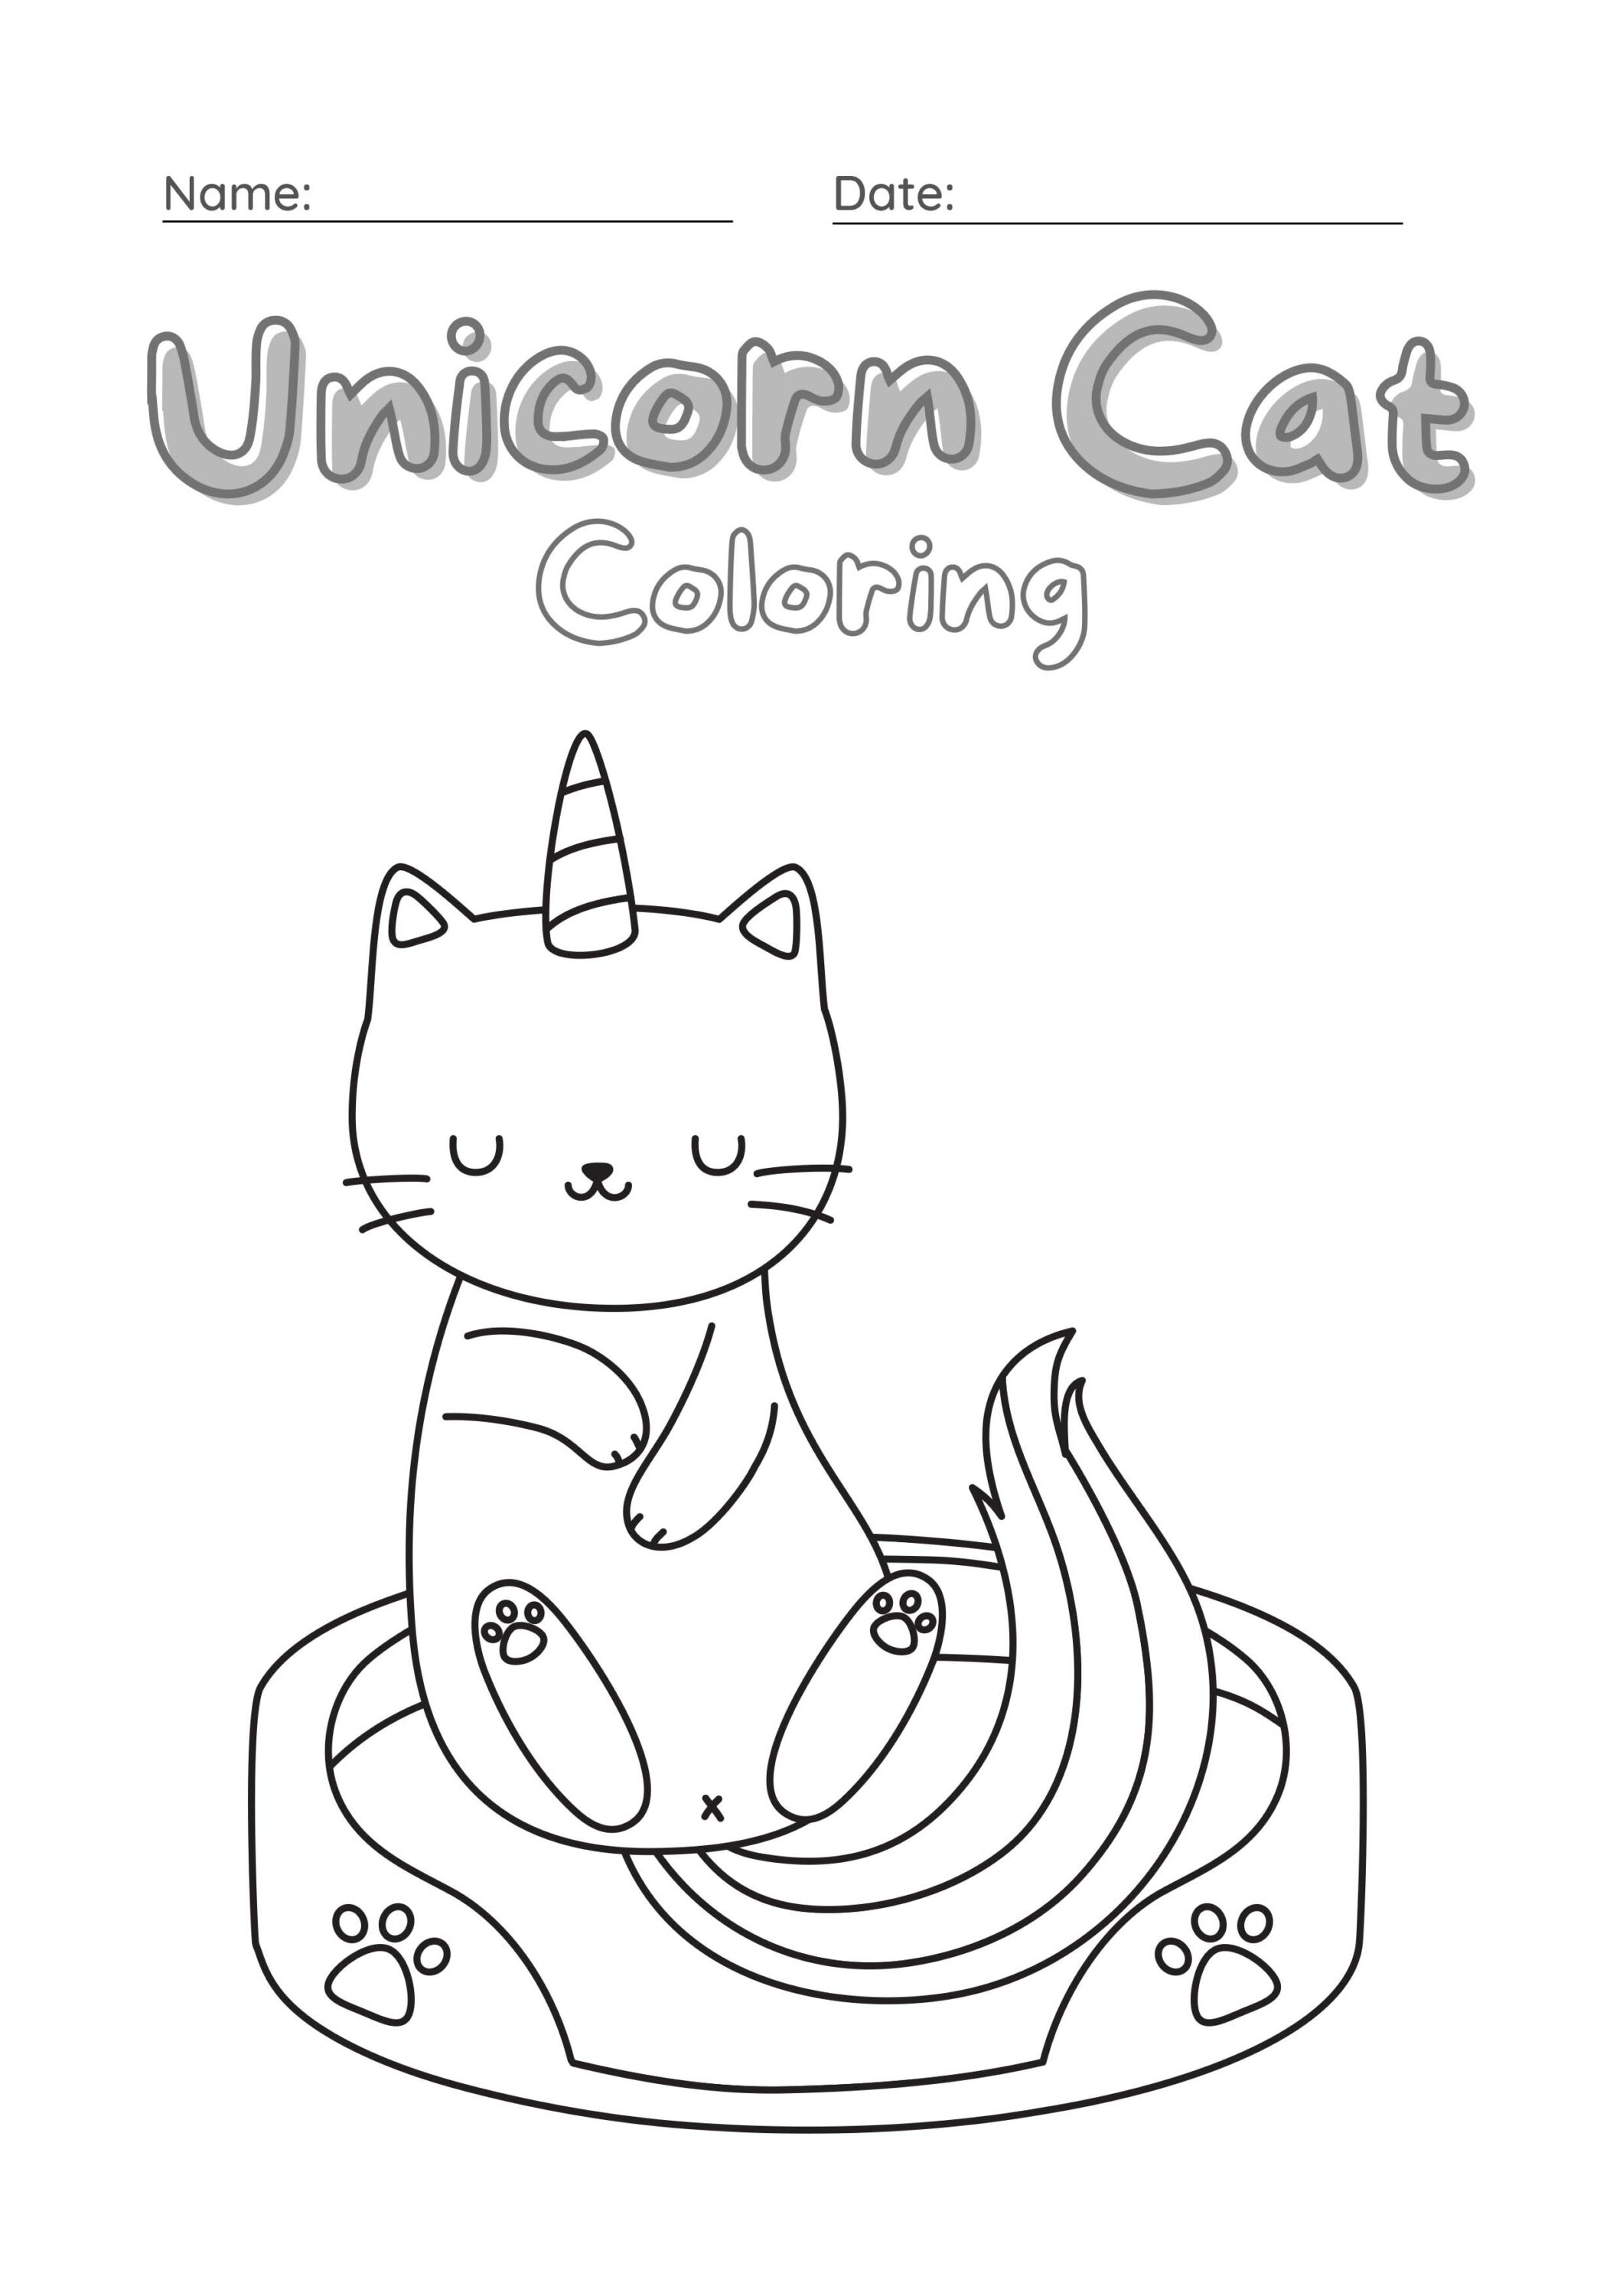 Unicorn Cat Coloring Worksheet Set 13